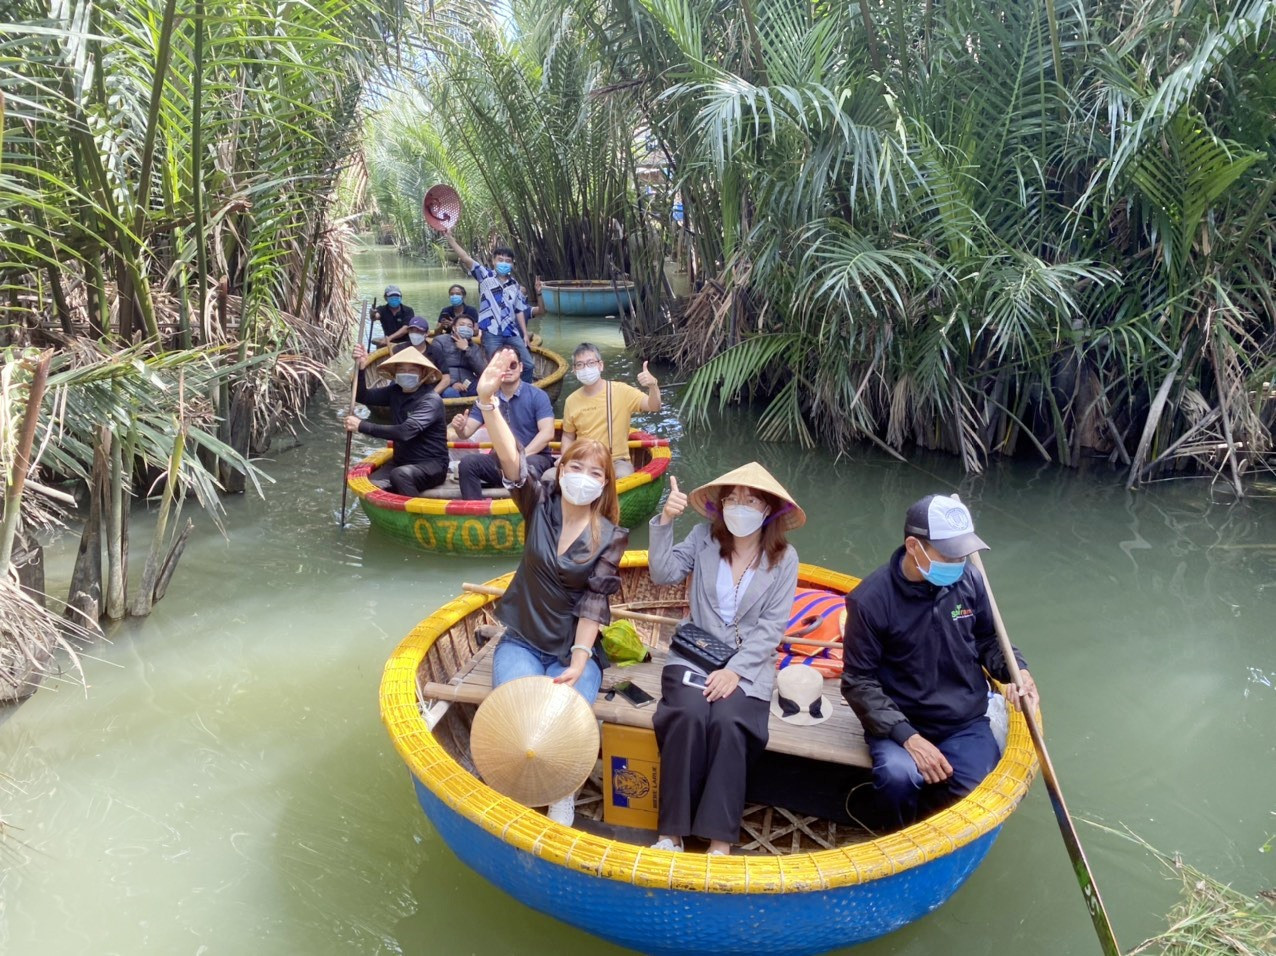 Bay Mau nipa palm forest, Hoi An city, Quang Nam province